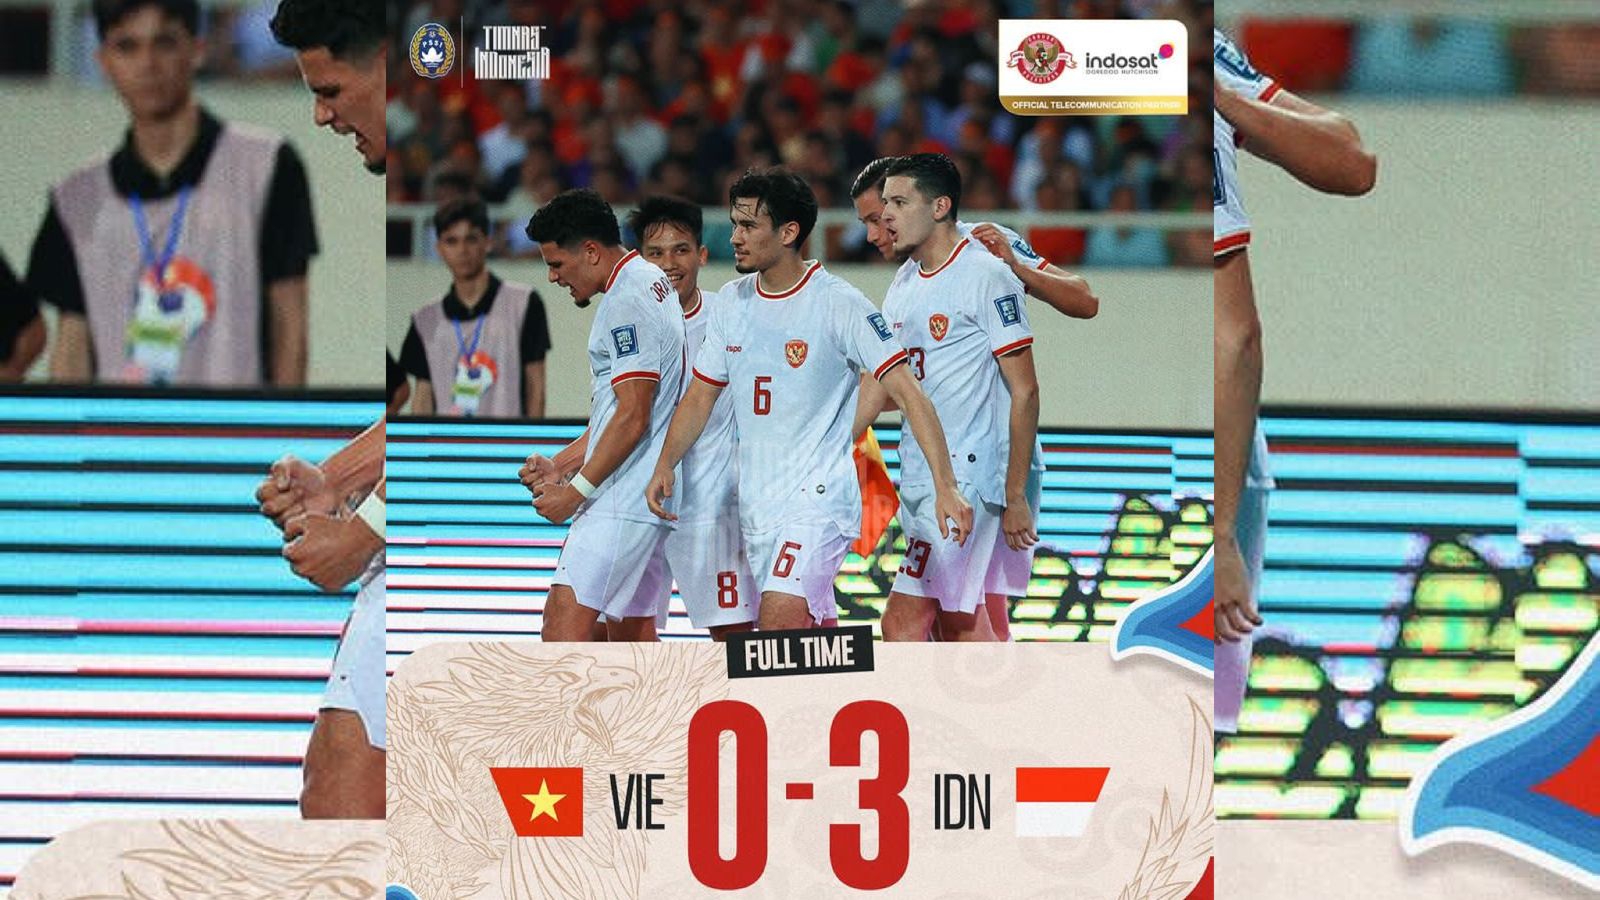 Menyala Abangku! Hasil Timnas Indonesia vs Vietnam, Skuad Garuda Kokoh di Runner Menang 3-0 